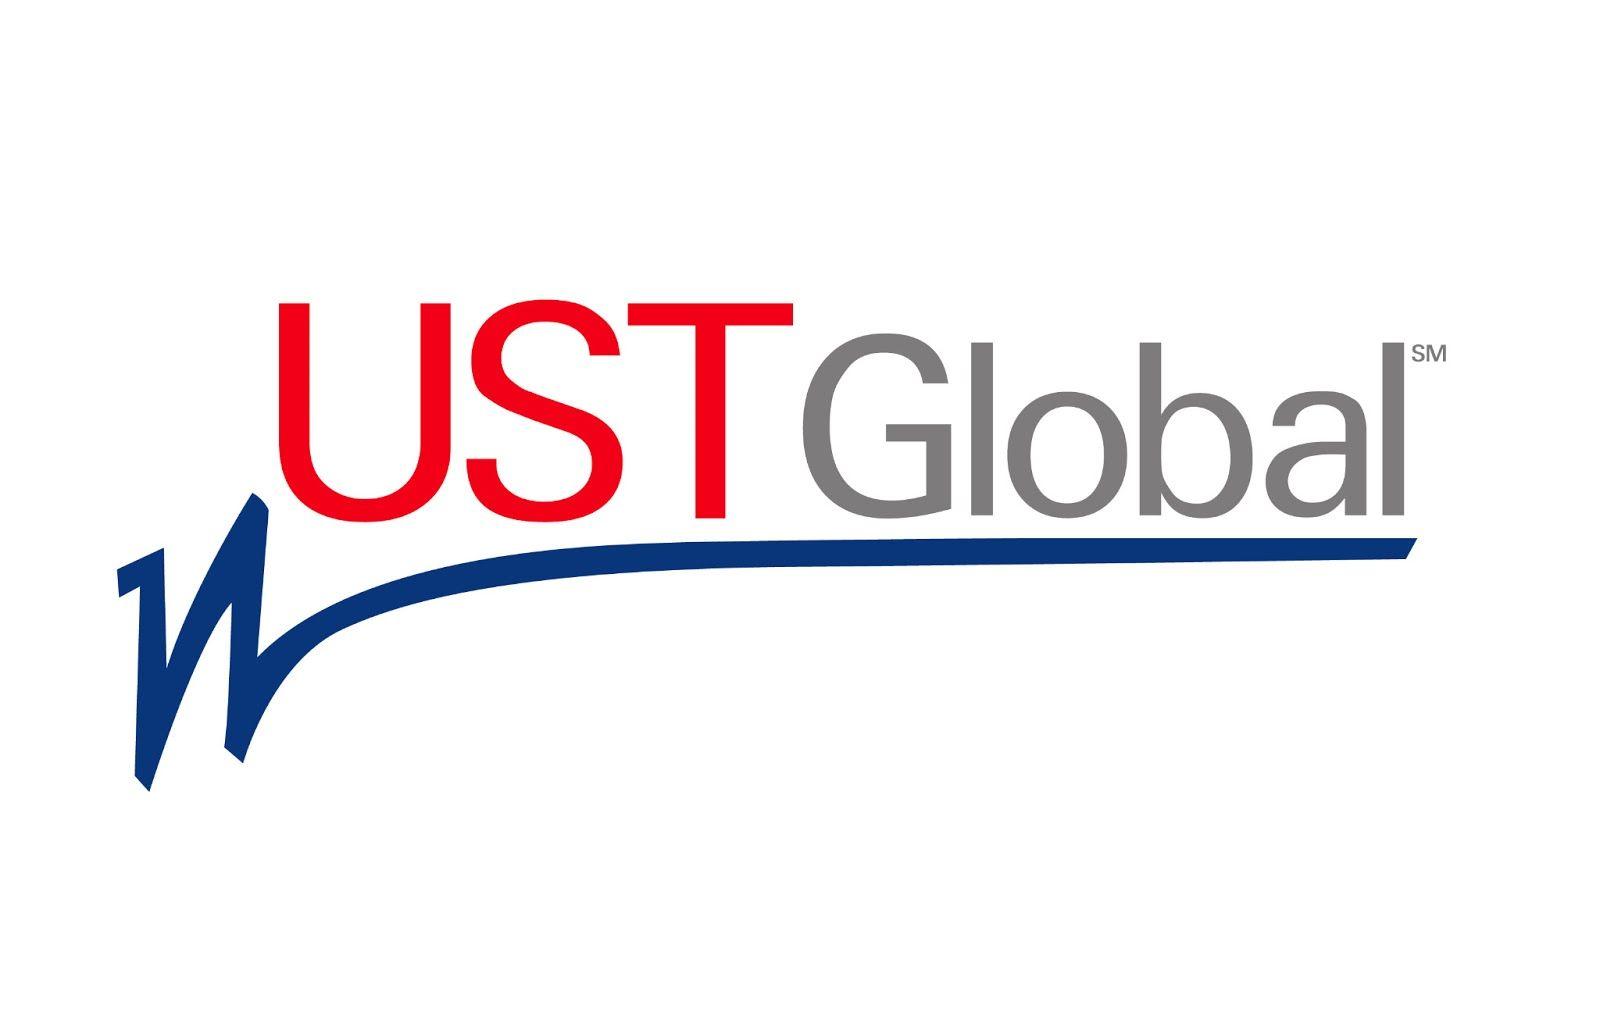 American Information Technology Company Logo - UST To Train 10K Employees, Establish R&D Center In Israel